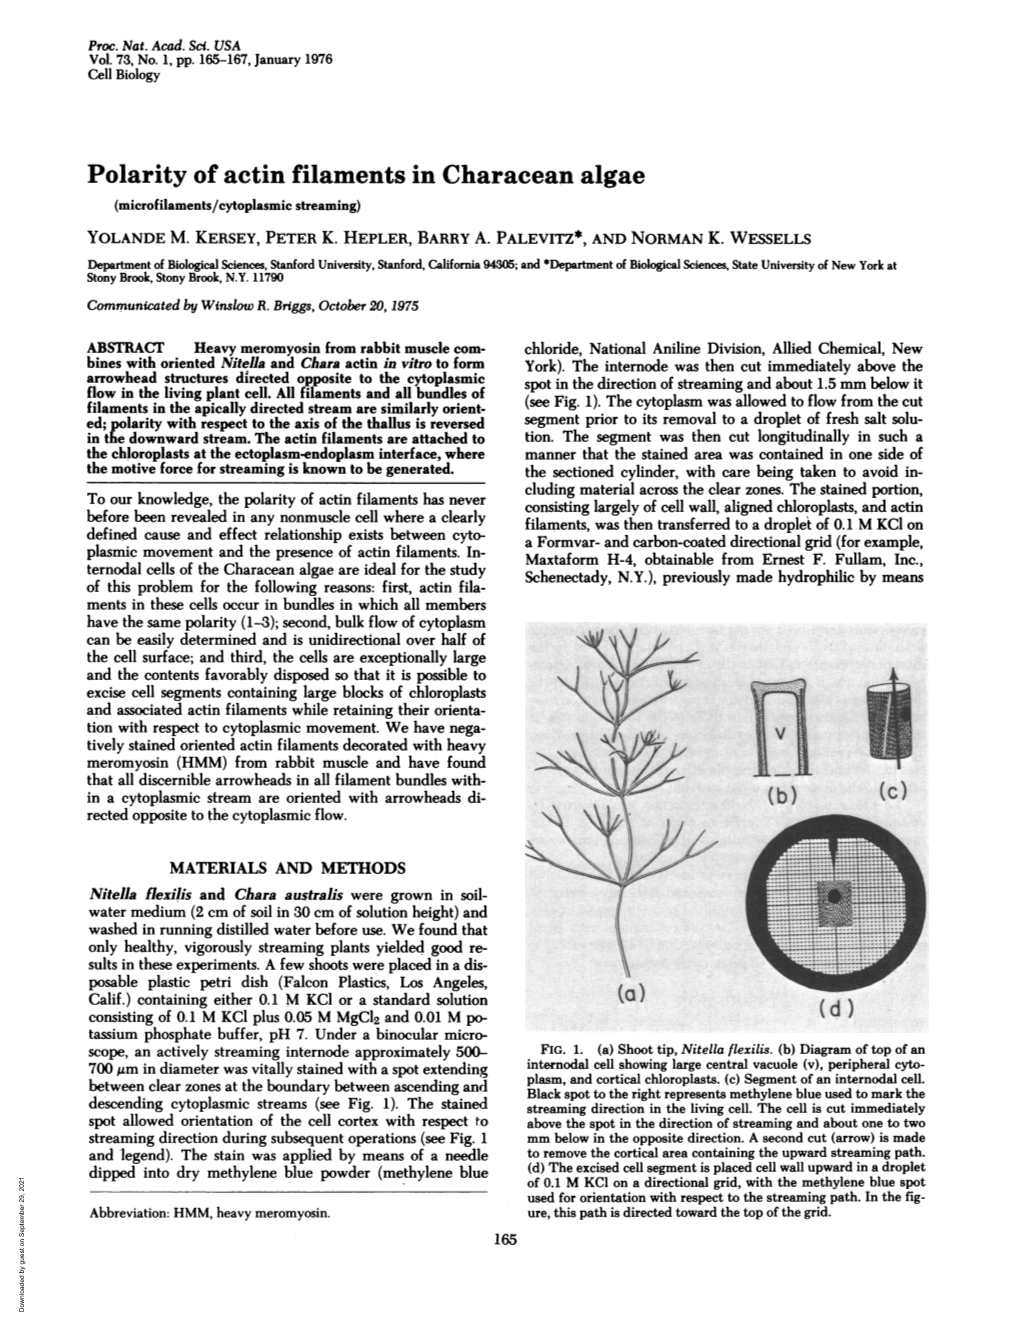 Polarity of Actin Filaments in Characean Algae (Microfilaments/Cytoplasmic Streaming) YOLANDE M